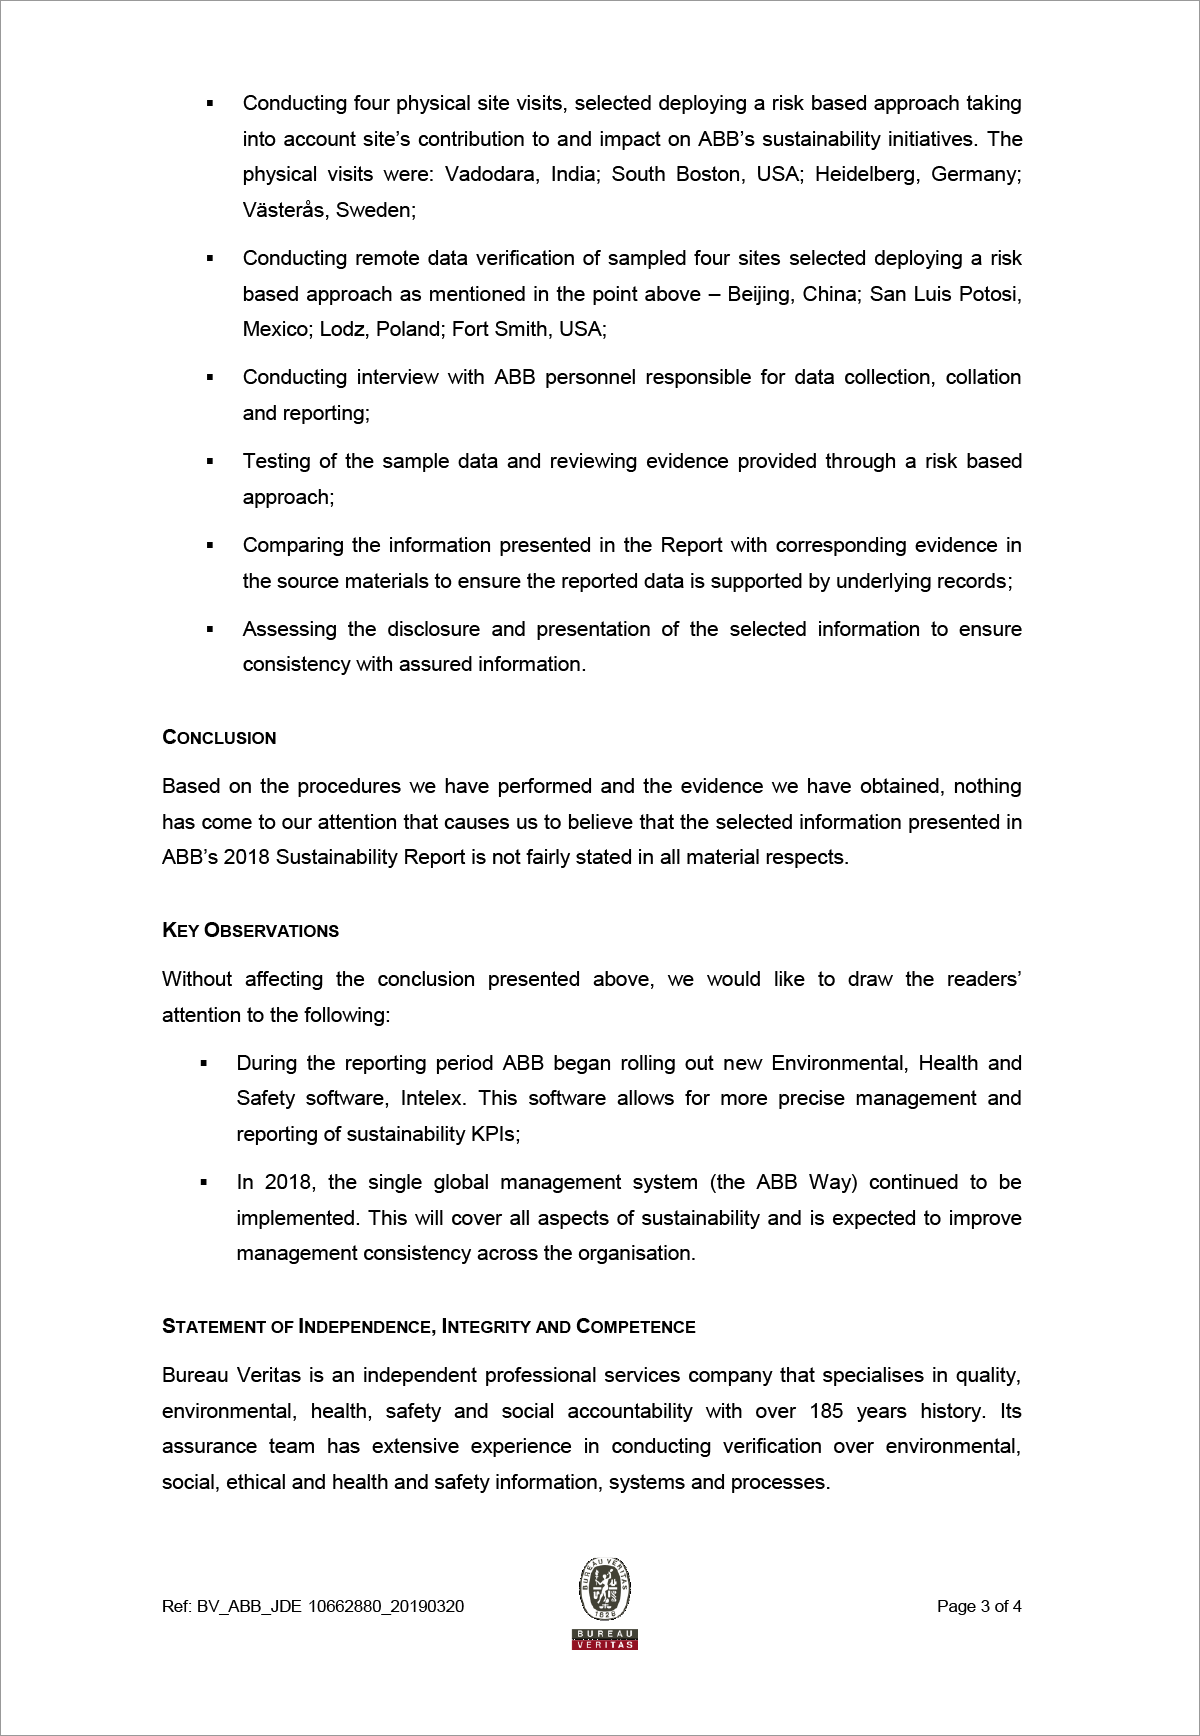 Bureau Veritas assurance statement– page 3 of 4 (document)